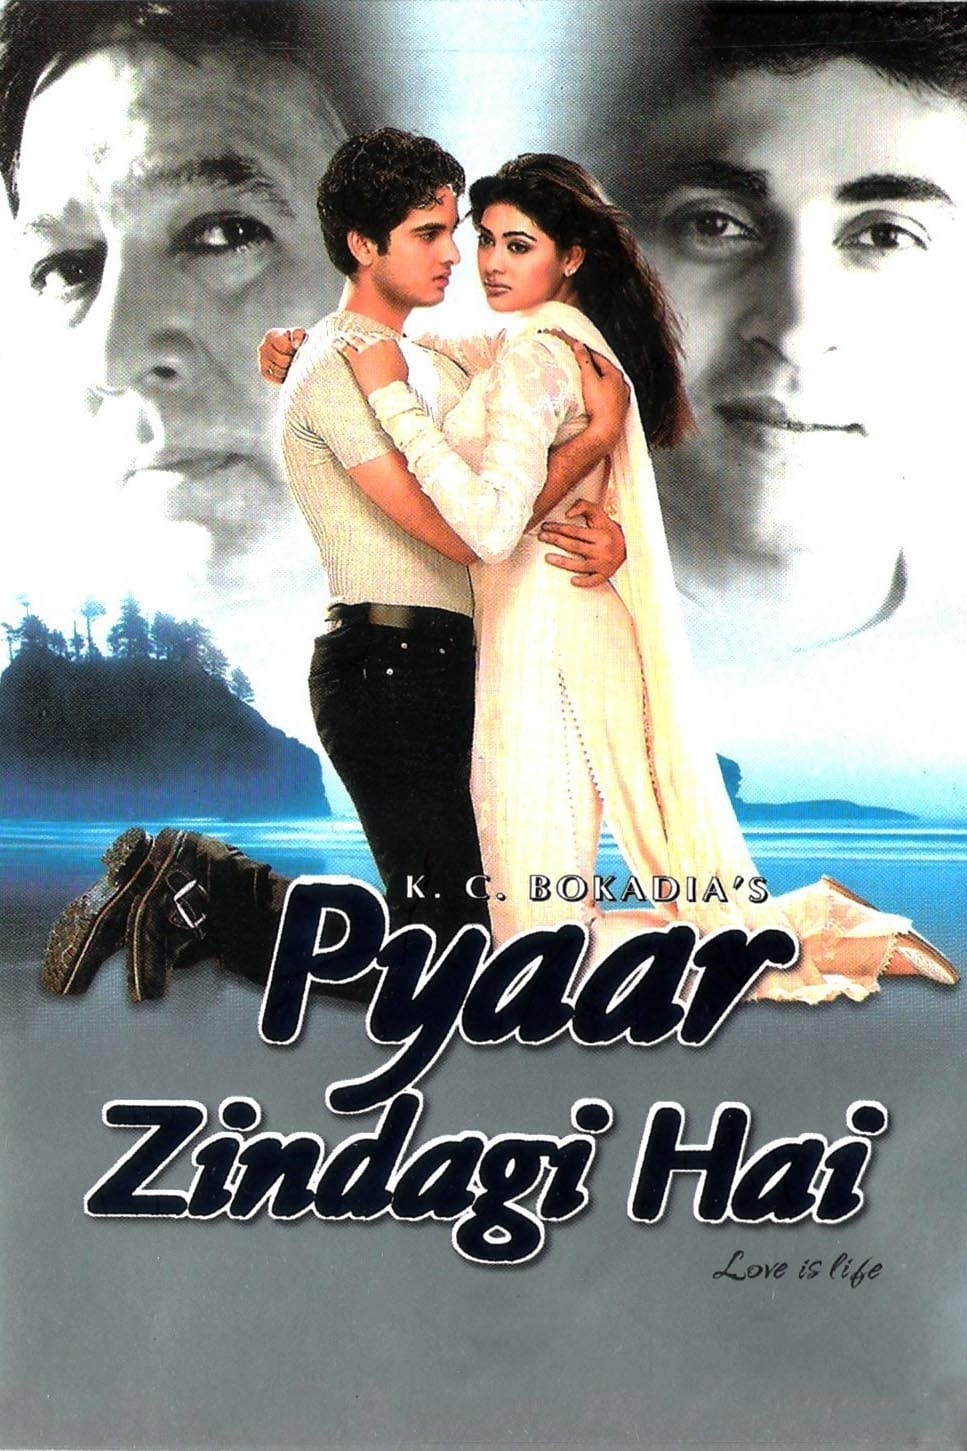 Poster for the movie "Pyaar Zindagi Hai"